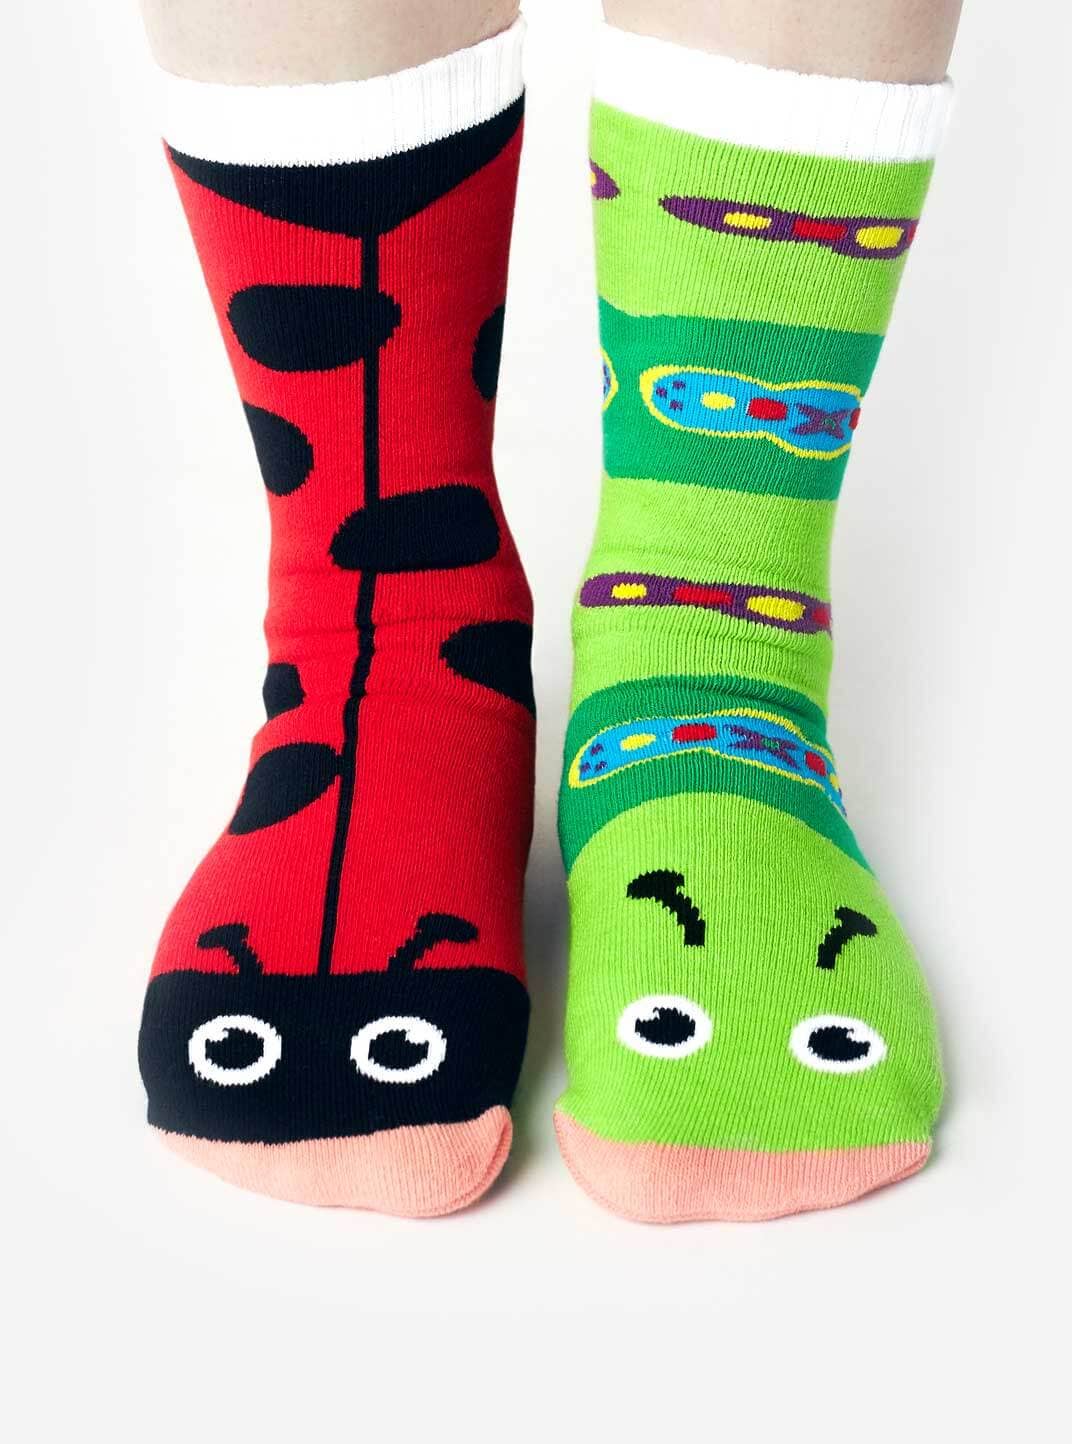 Ladybug & Caterpillar | Adult Socks | Mismatched Fun Socks